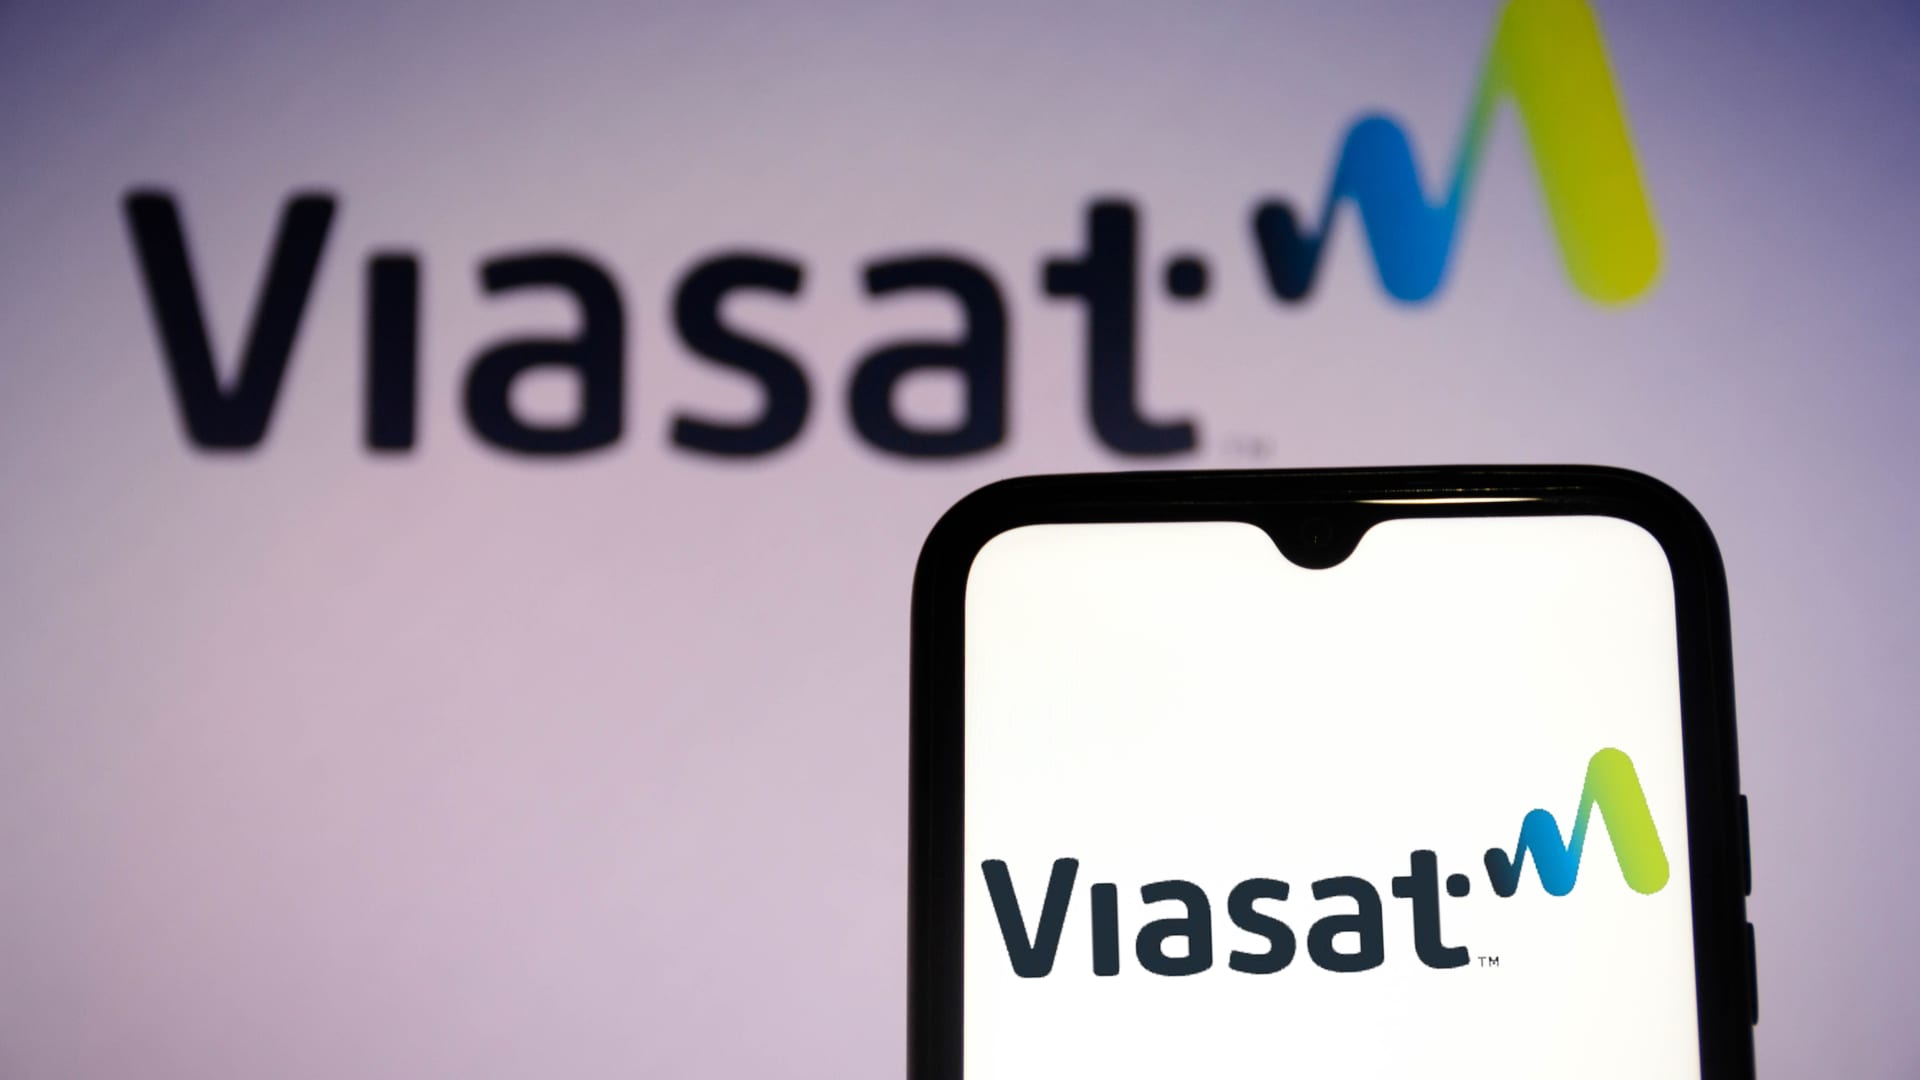 ‘Cyber event’ affecting satellite-world wide web services in Ukraine: Viasat